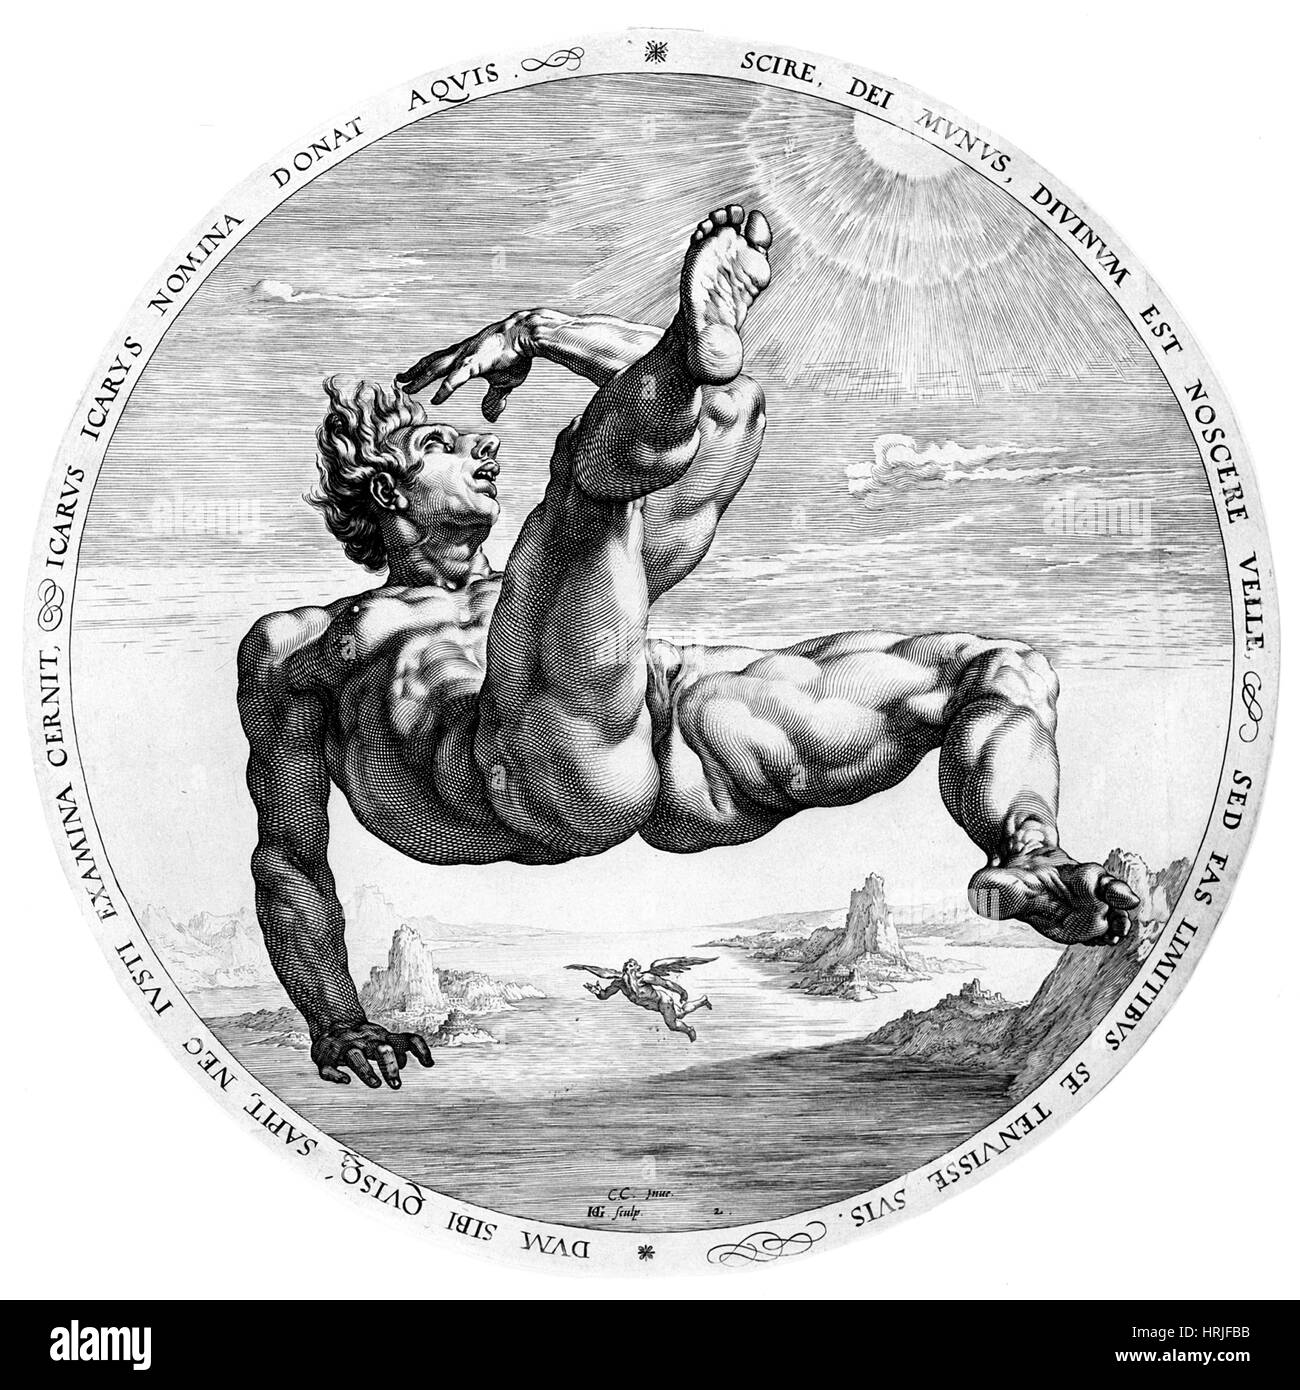 icarus #greekmythology  Art deco illustration, Art prompts, Icarus  wallpaper greek